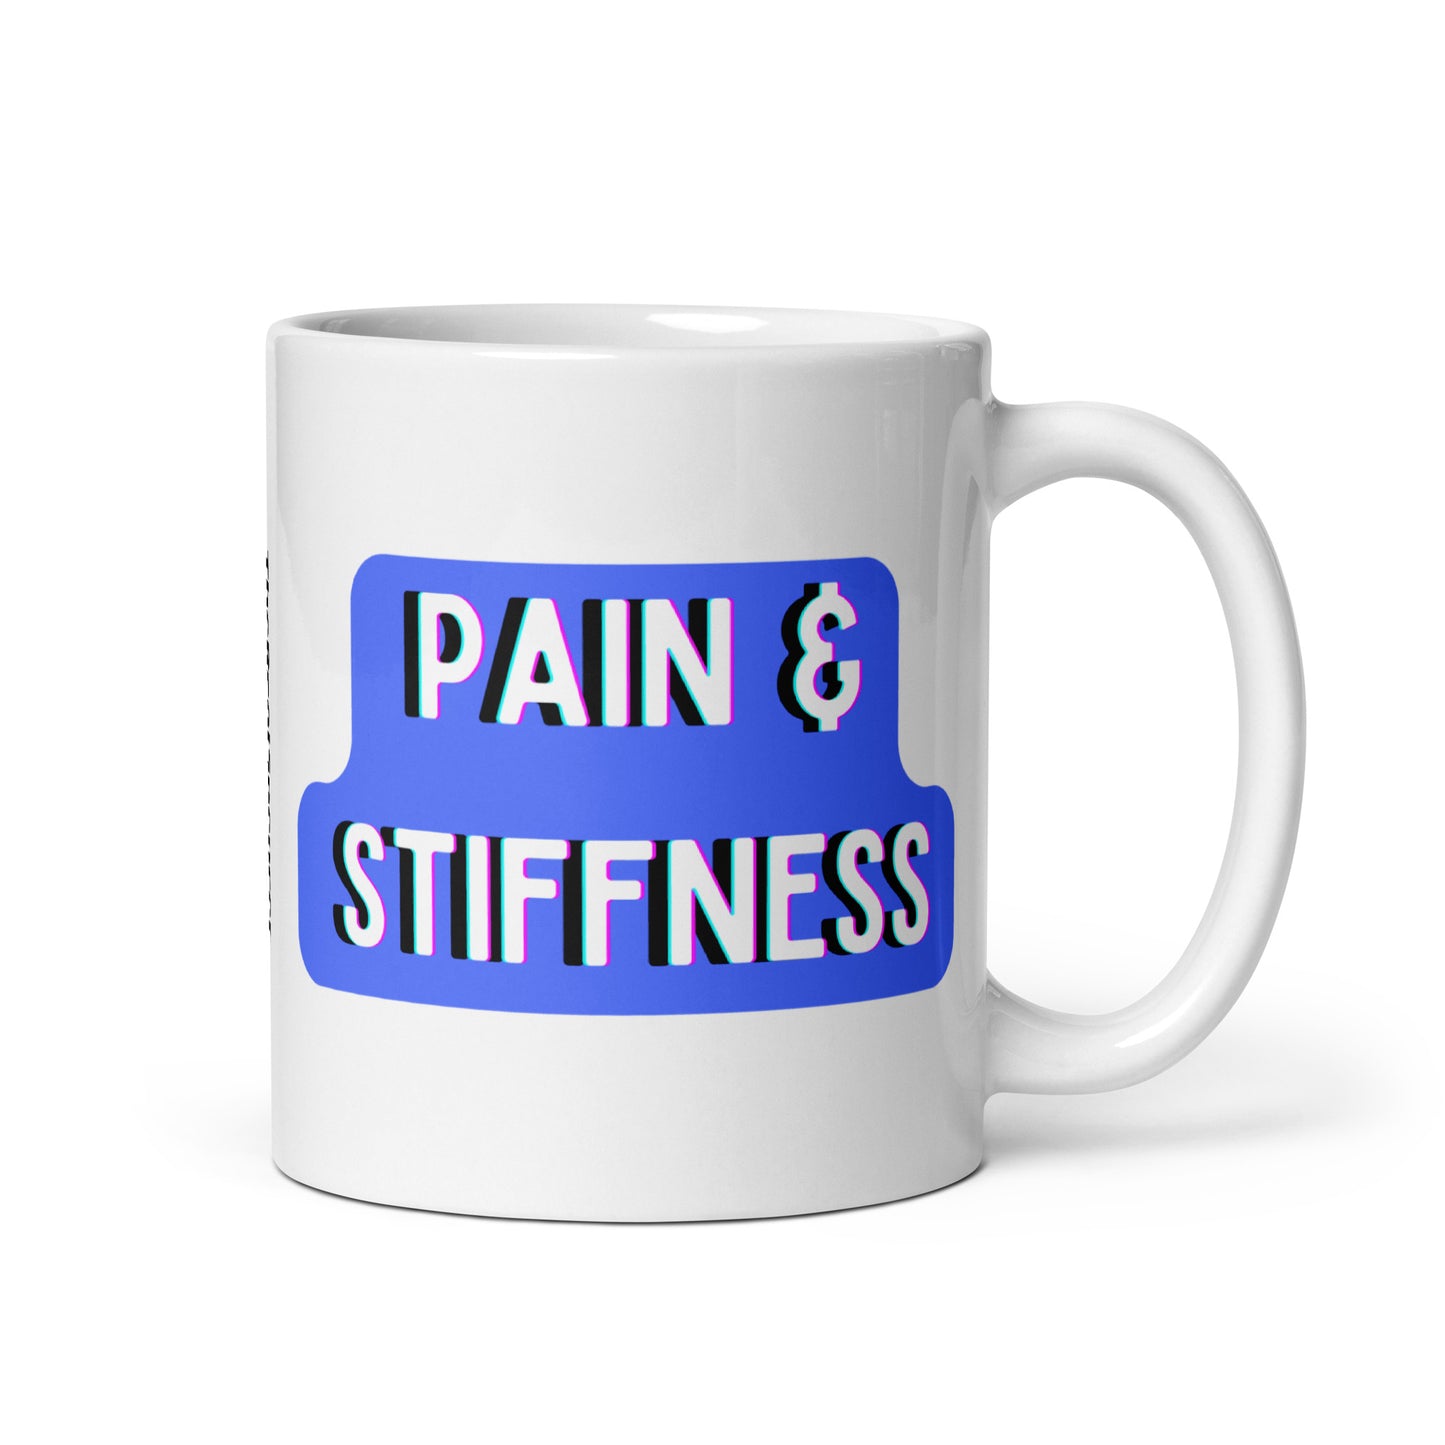 Pain and Stiffness Mug